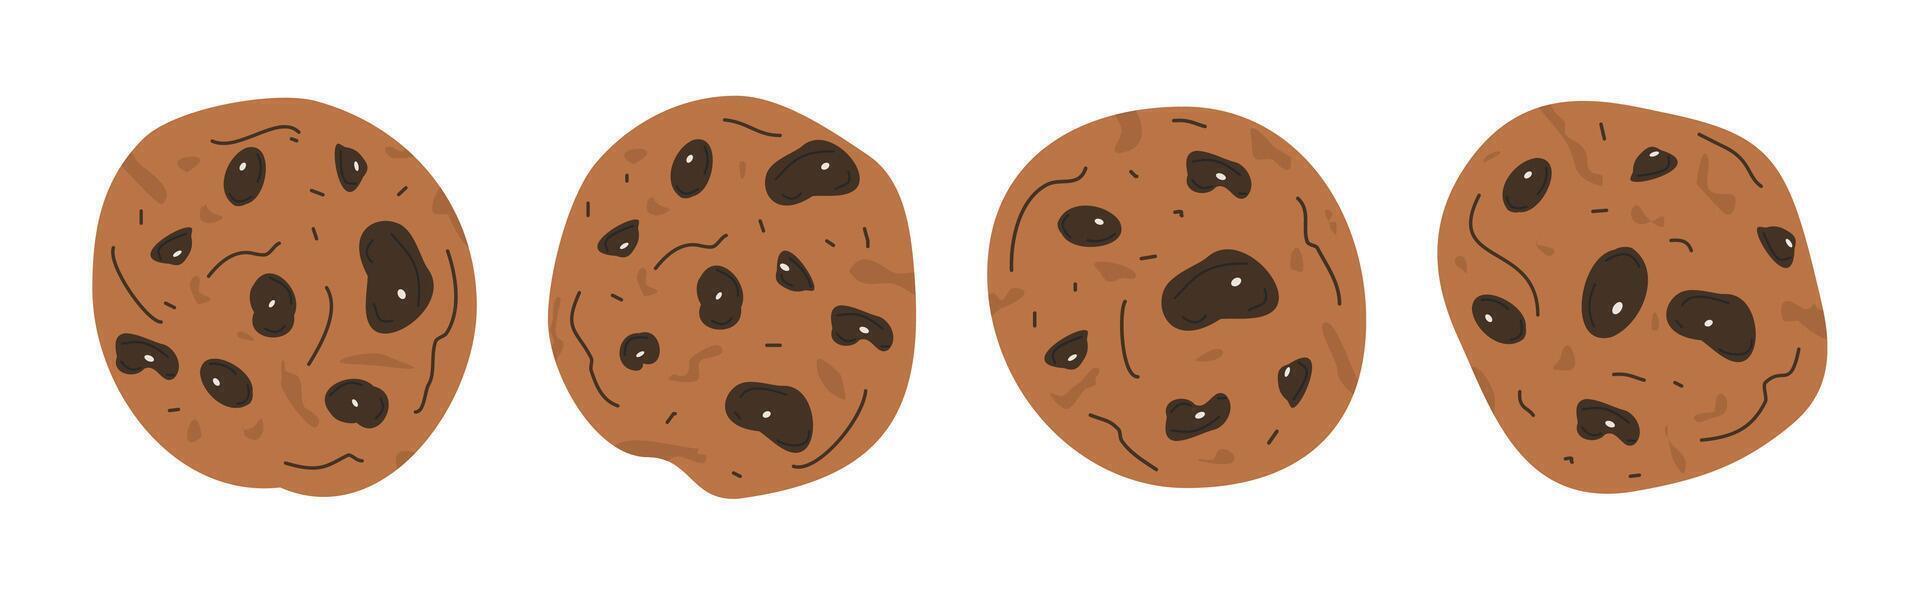 conjunto chocolate lasca biscoitos vetor